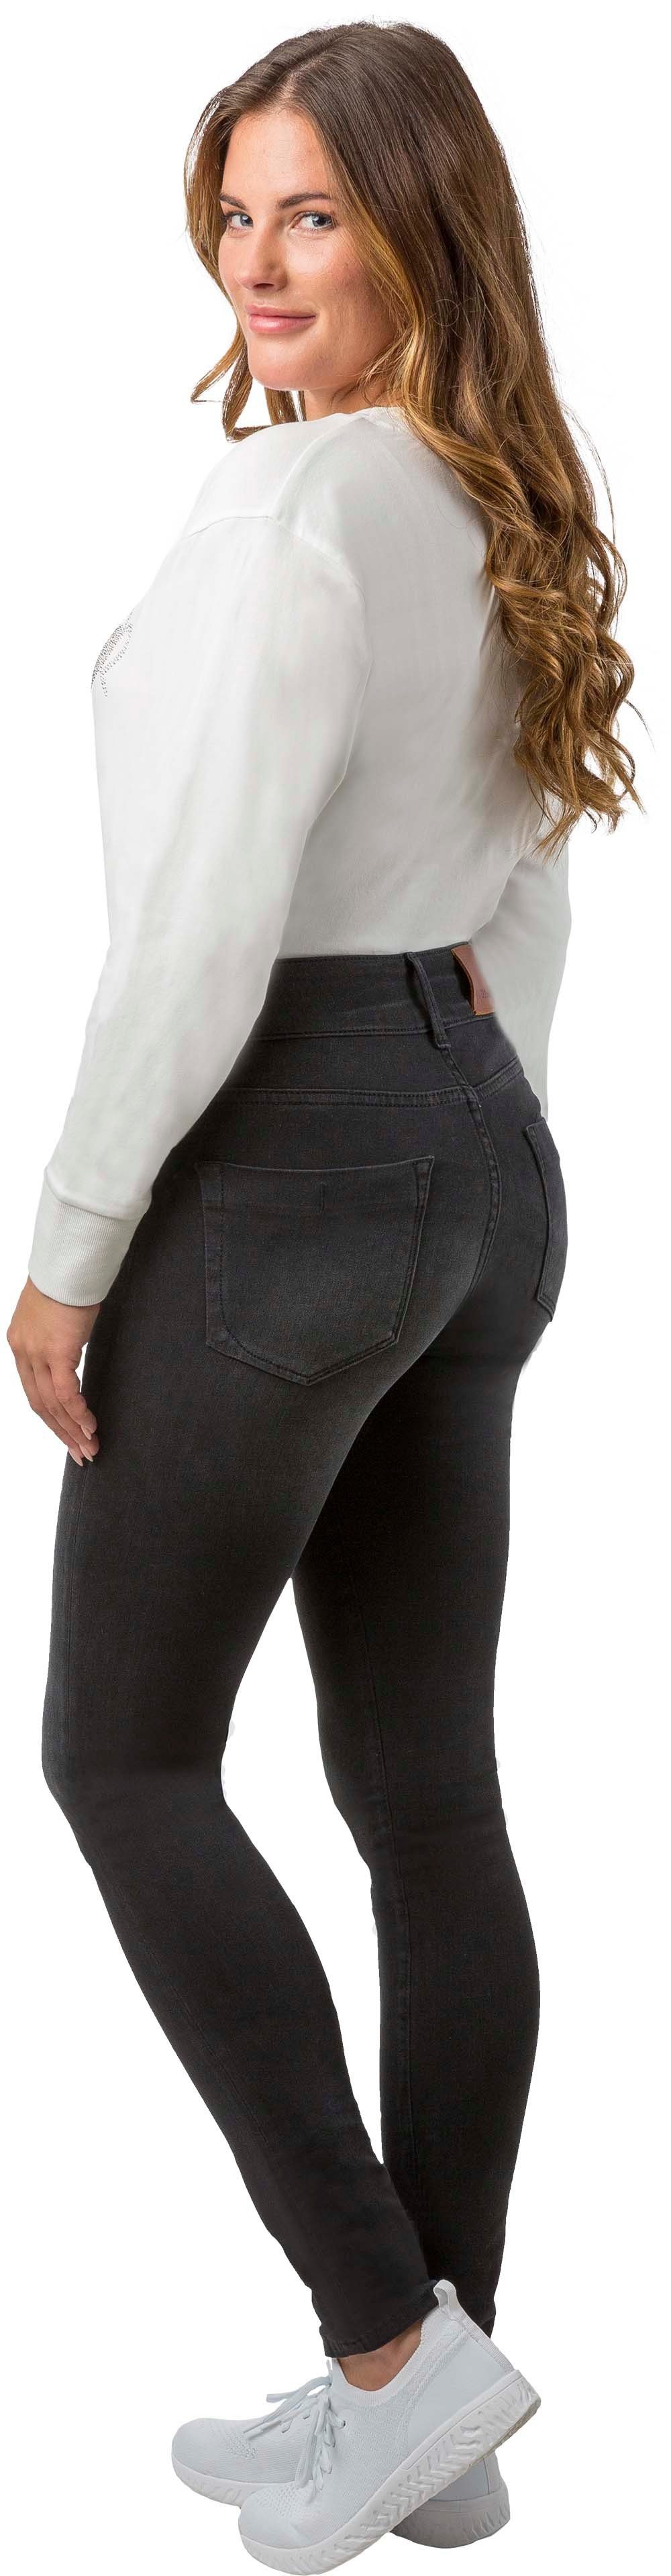 Stretch-Jeans 5-Pockets Milano Style washed black Gio-Elisa Gio